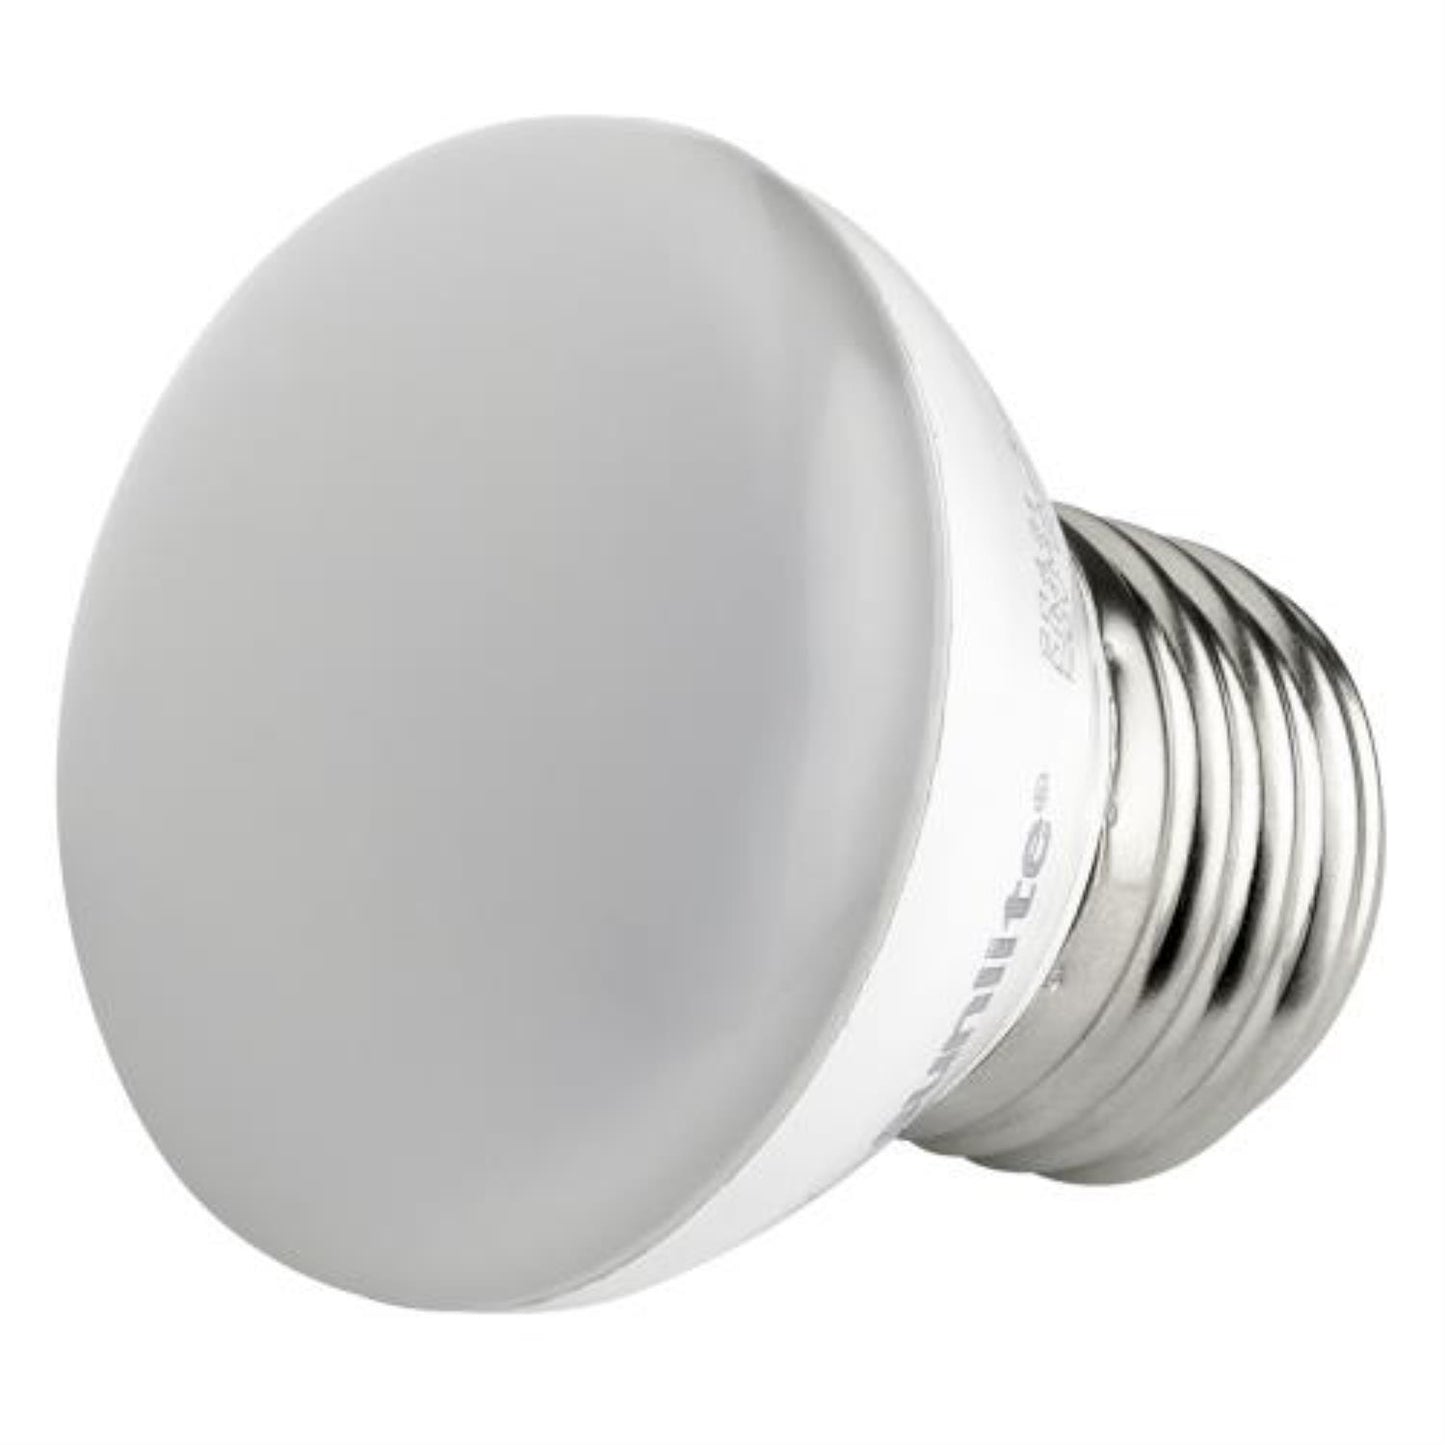 Sunlite LED R14 Floodlight 4 Watt (25W Equivalent) Medium (E26) Base, Warm White